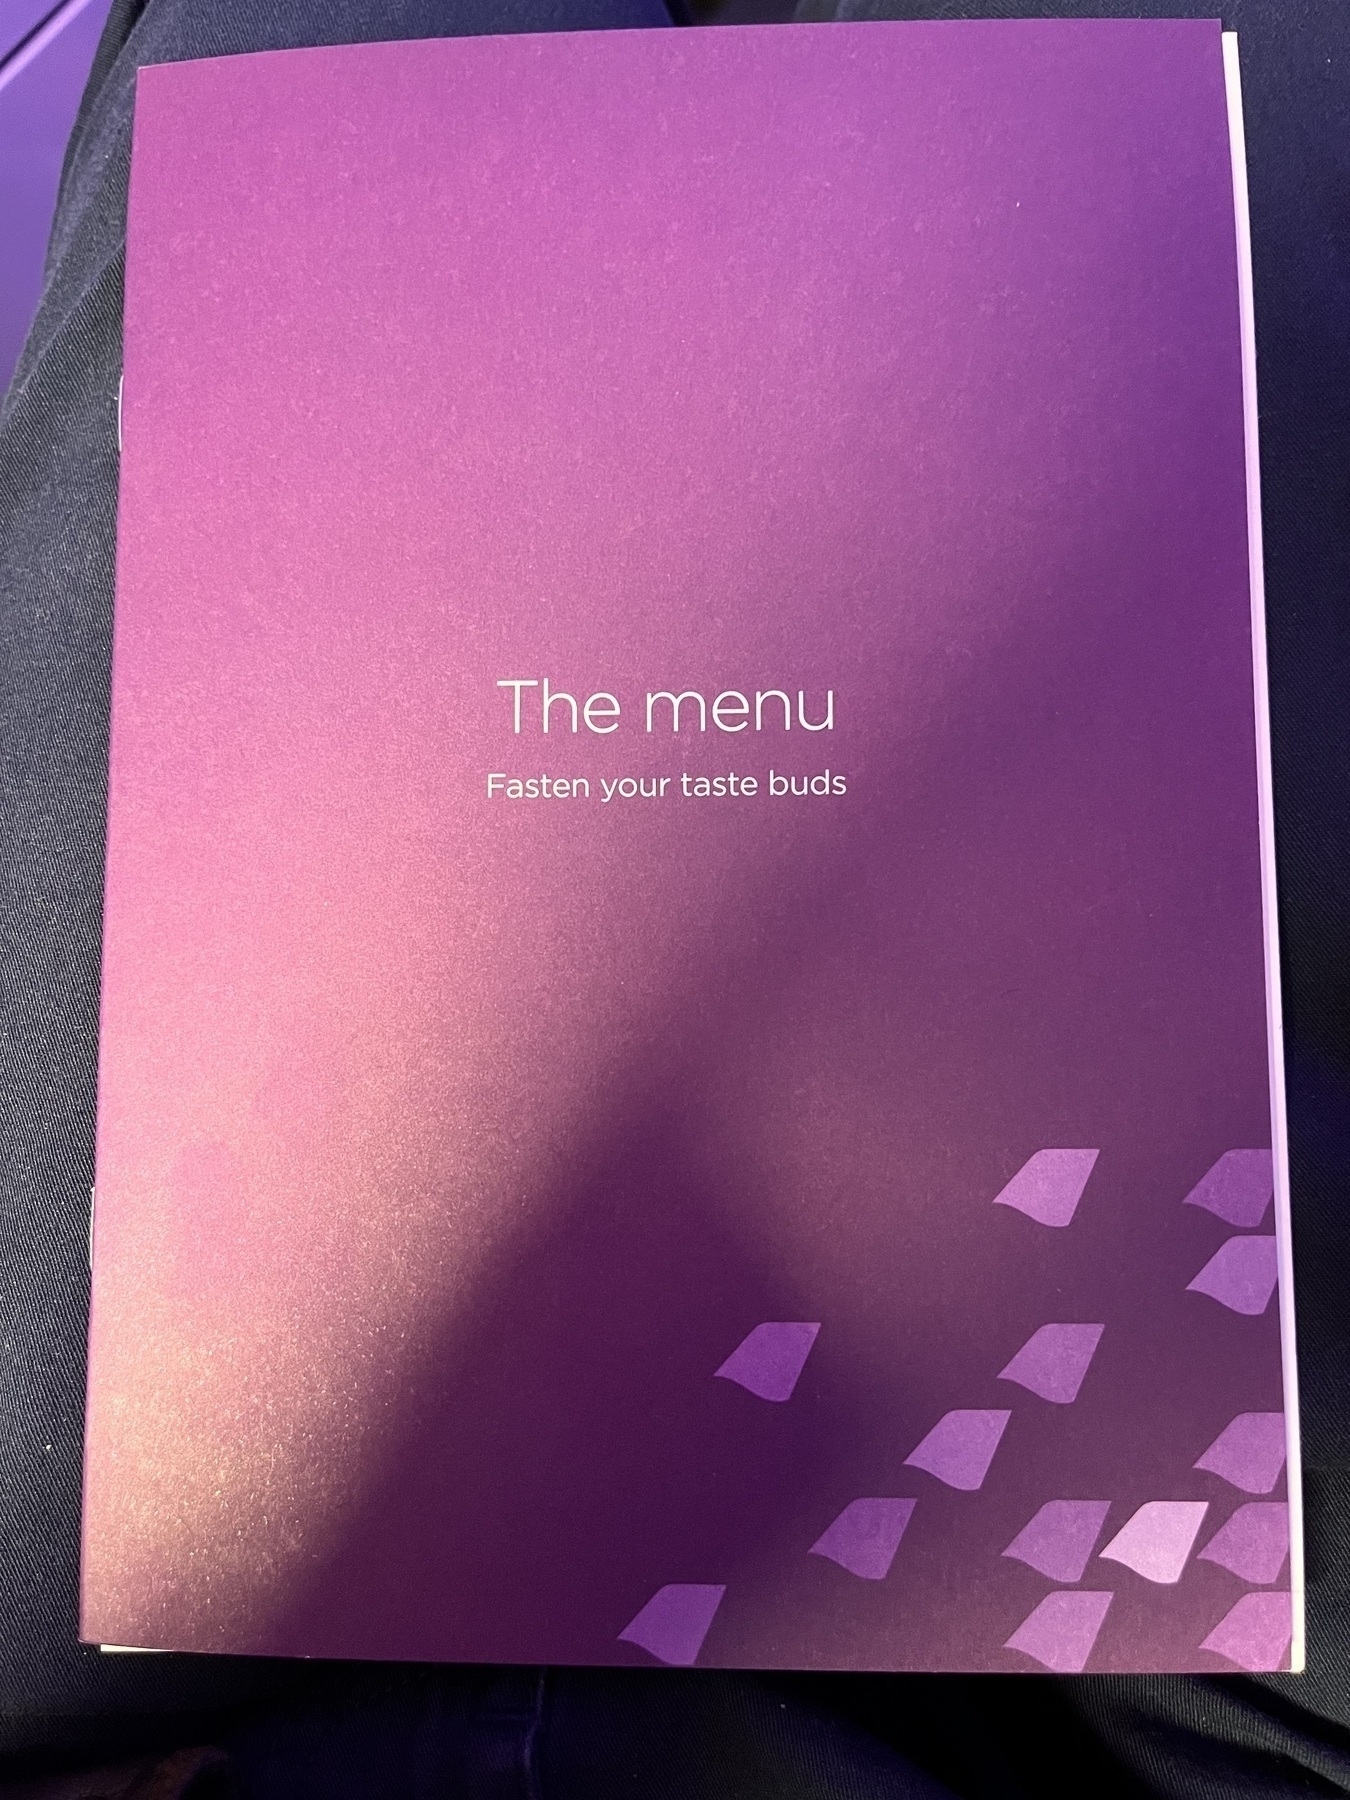 A menu on Virgin Atlantic